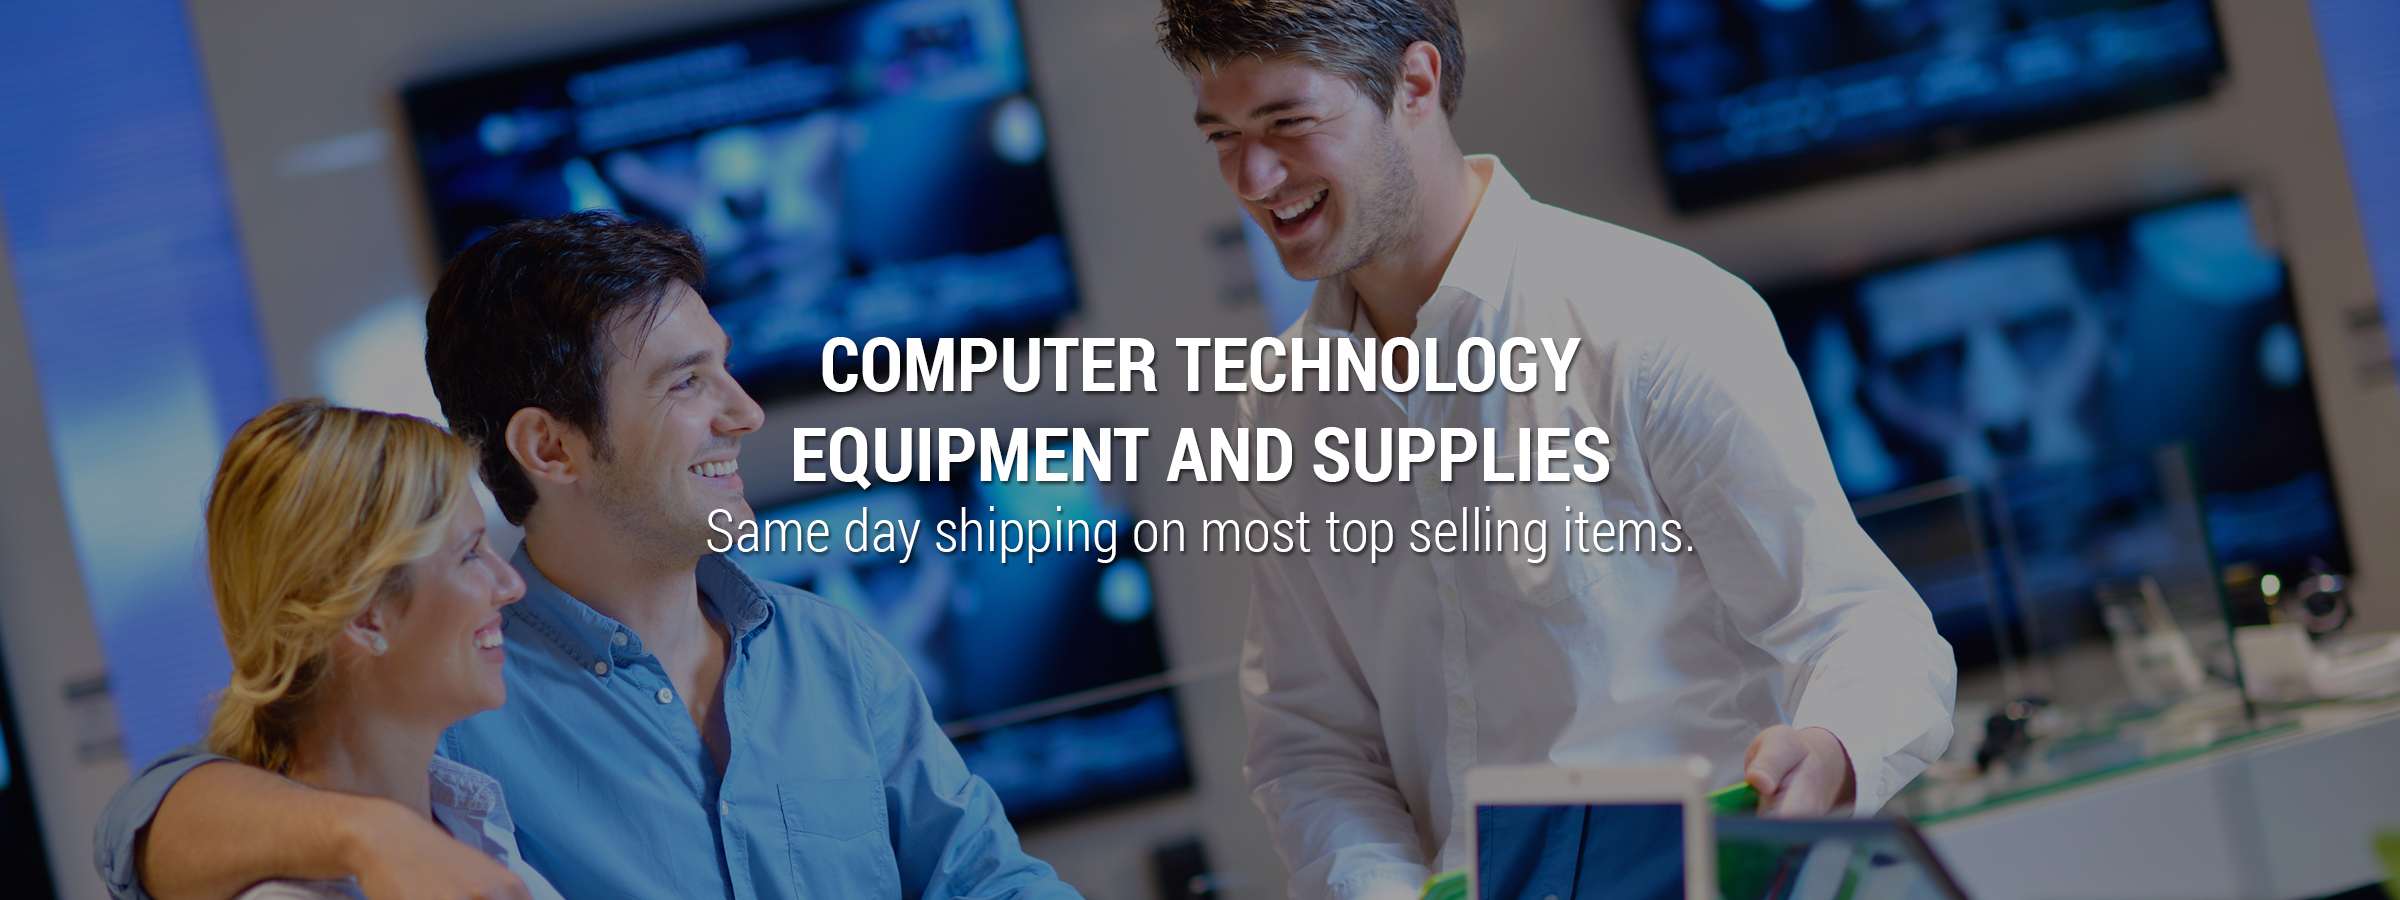 Computer Technology Equipment and Supplies